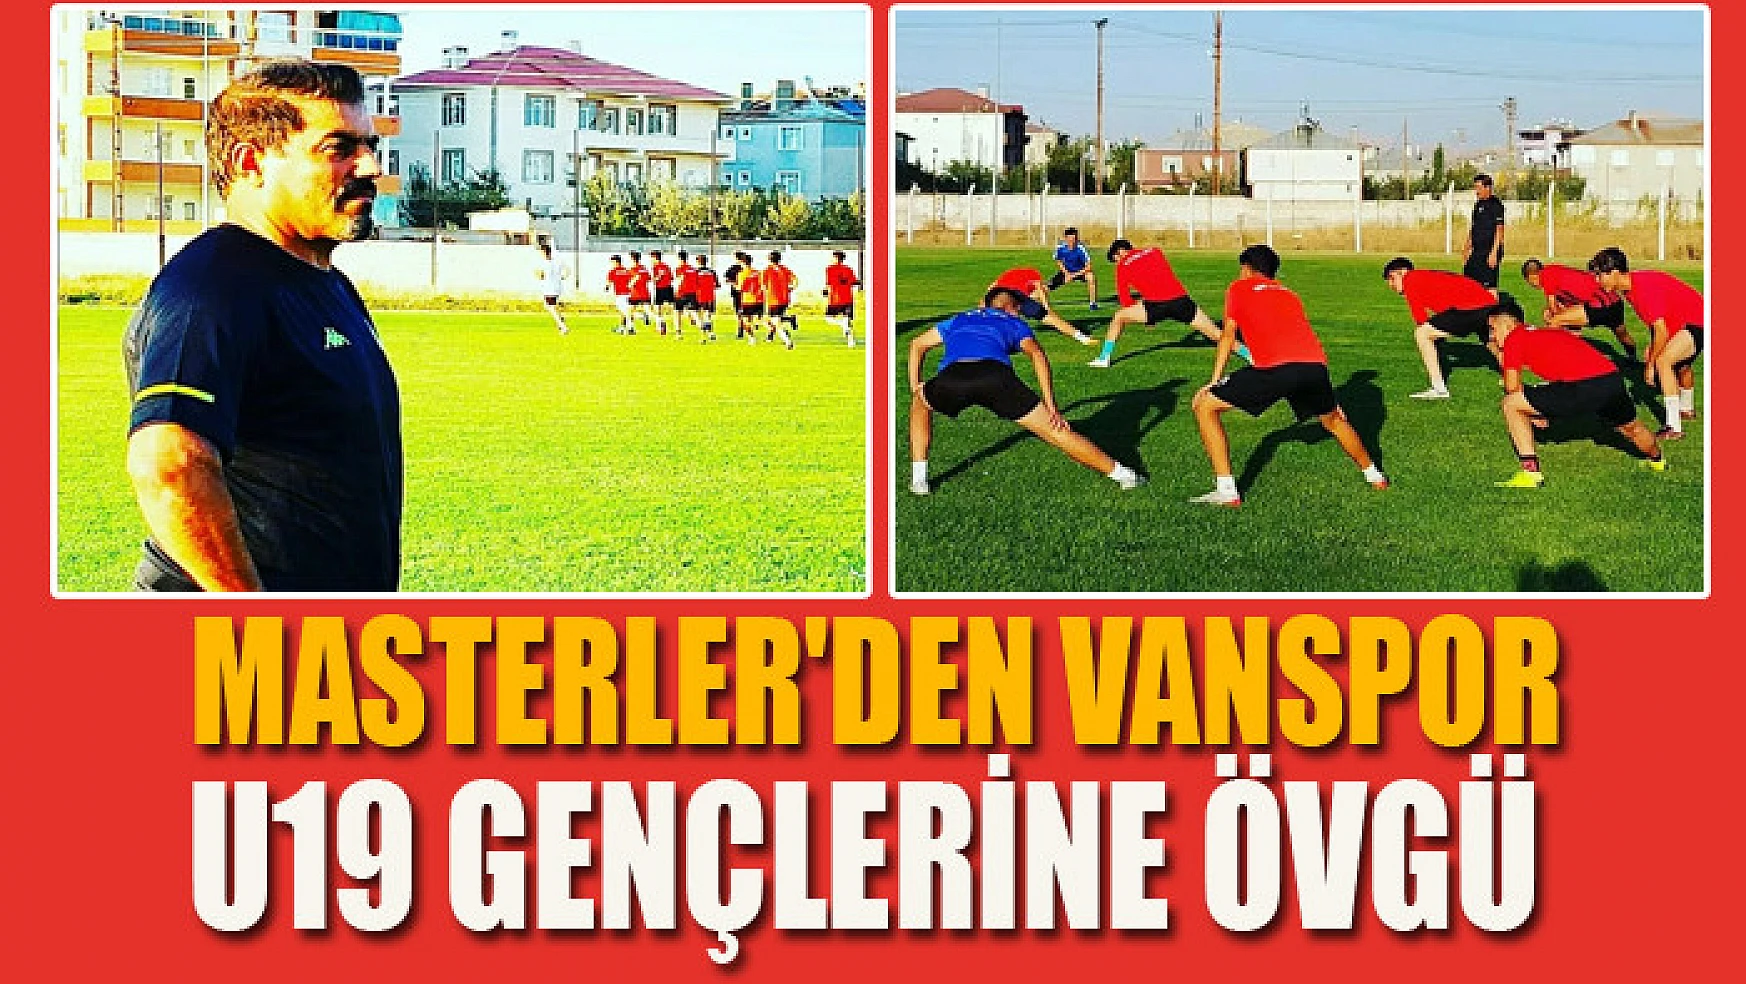 MASTERLER'DEN VANSPOR U19 GENÇLERİNE ÖVGÜ